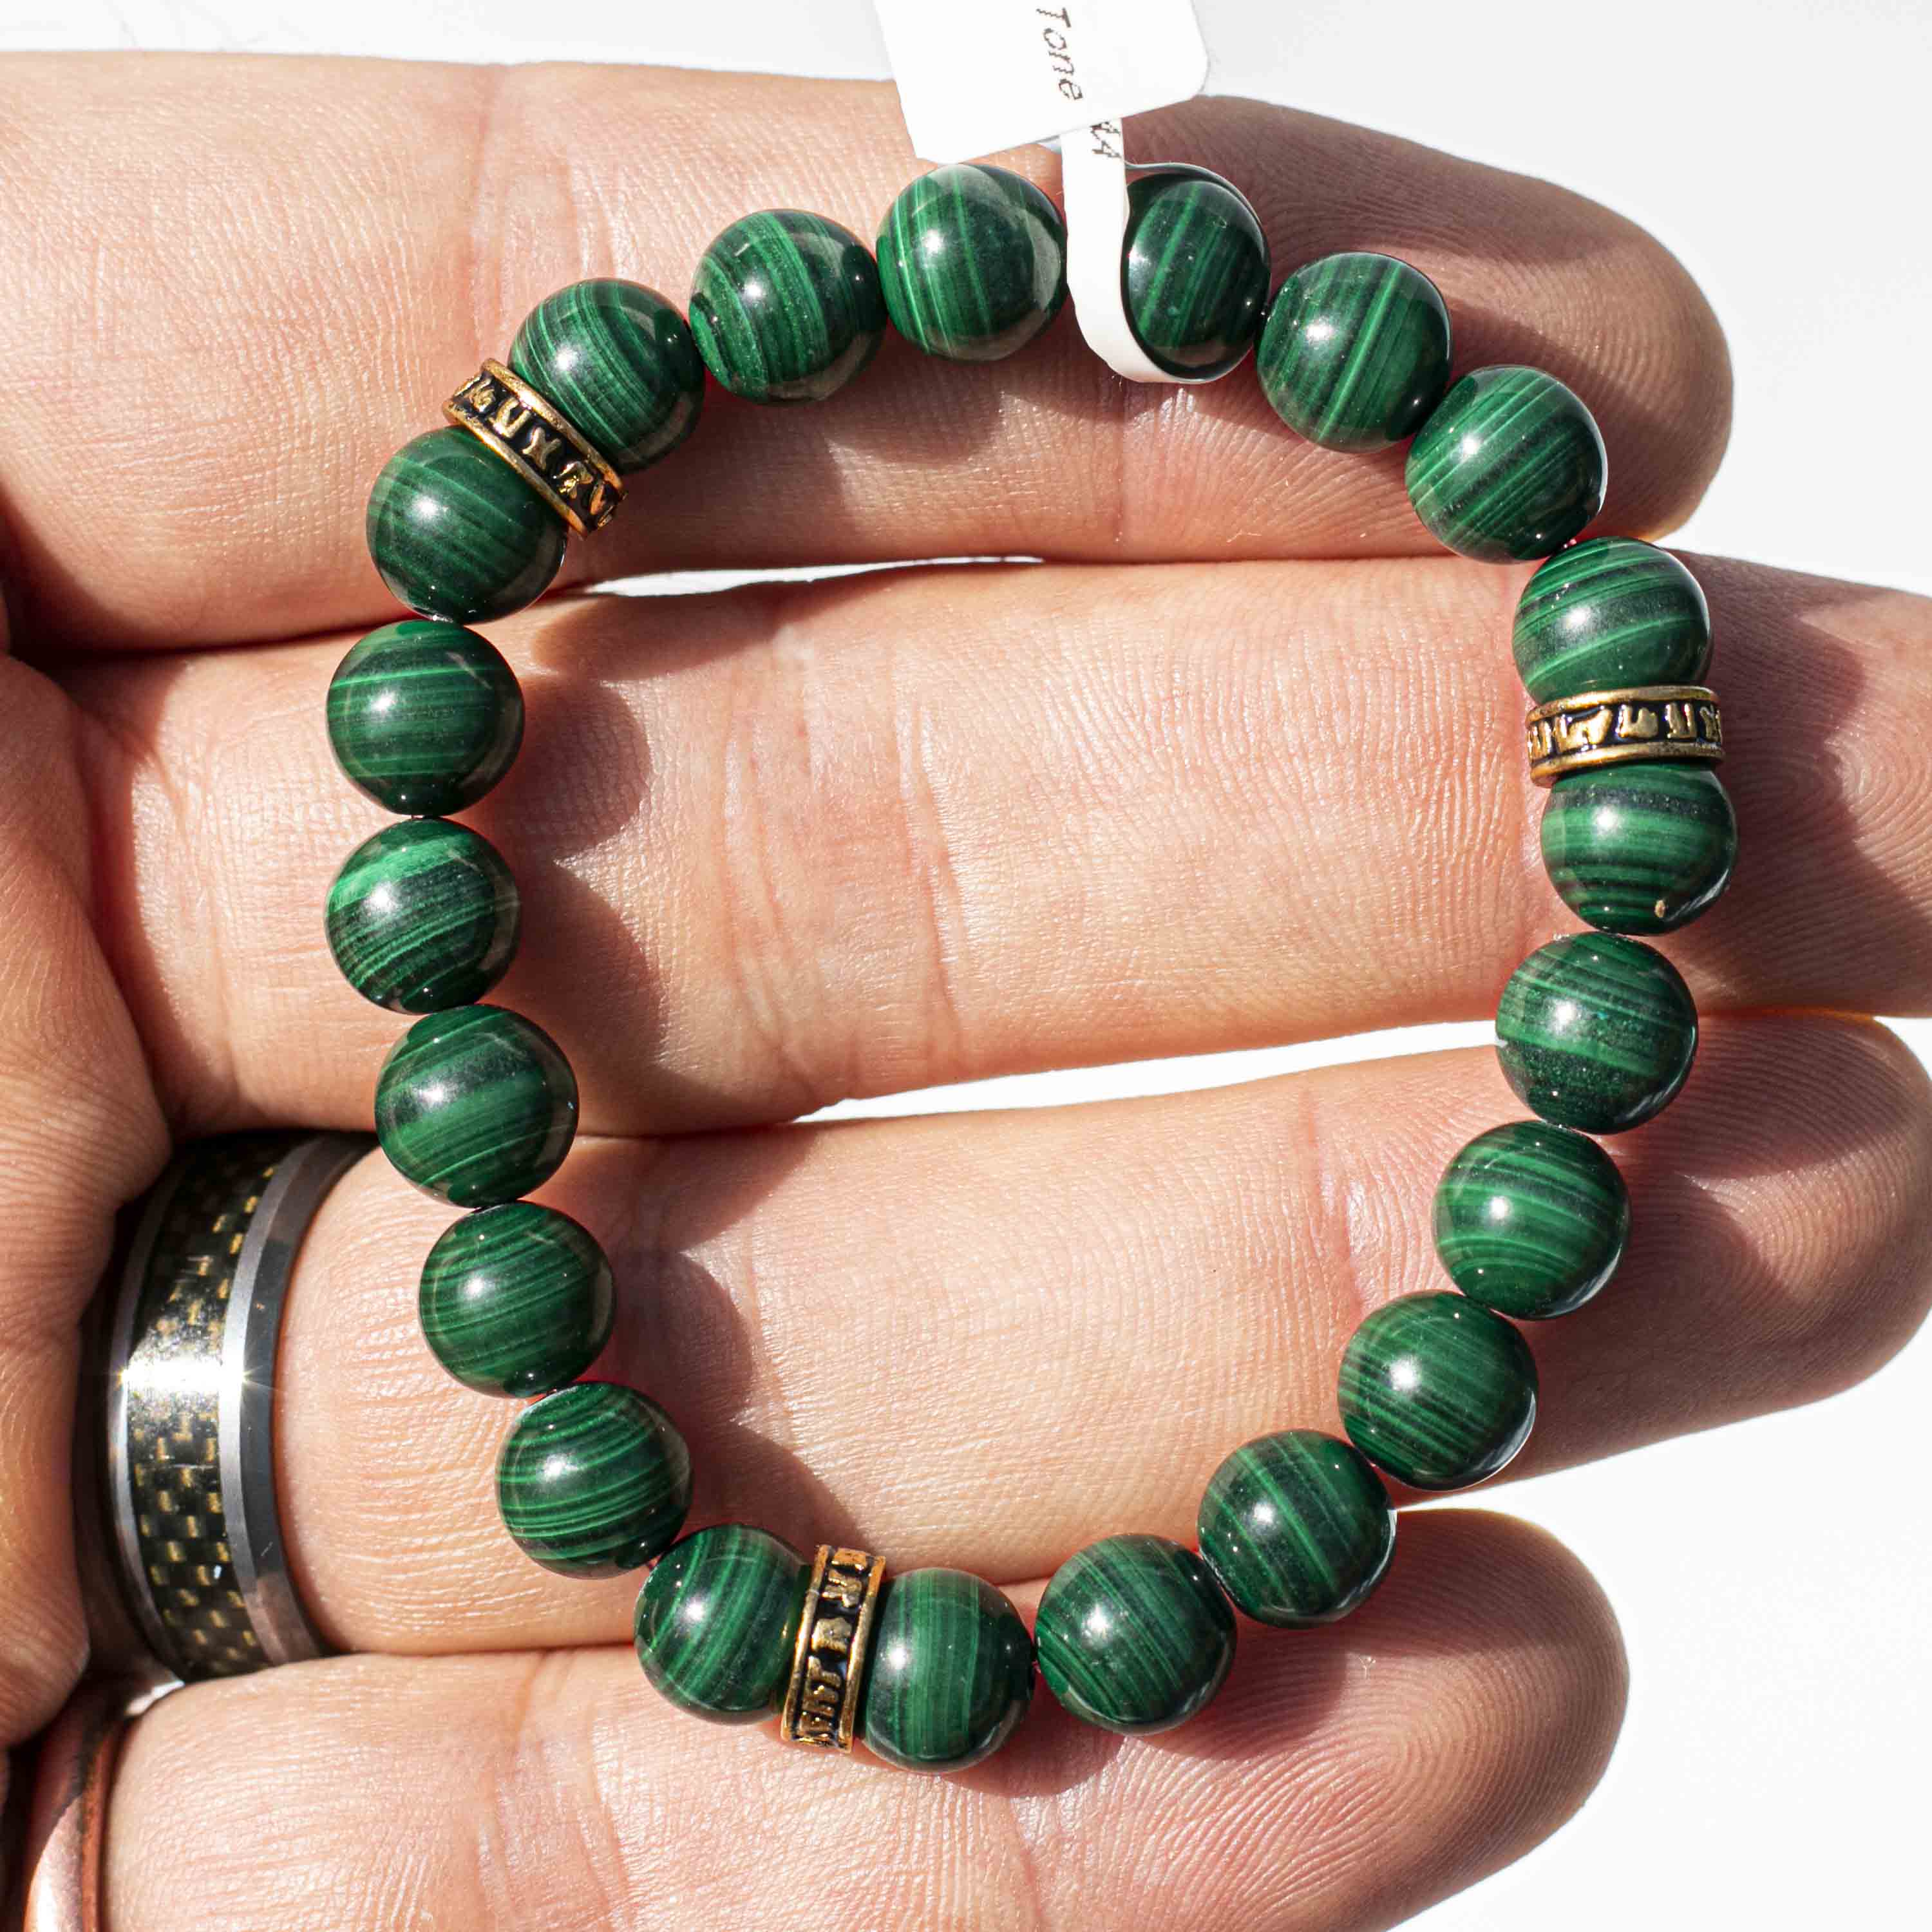 Stretchy Cord Healing Crystal Bracelet with Malachite (孔雀石) & Tibetan Style Golden Bronze Spacer Beads - Choose Preferred Bead & Wrist Size